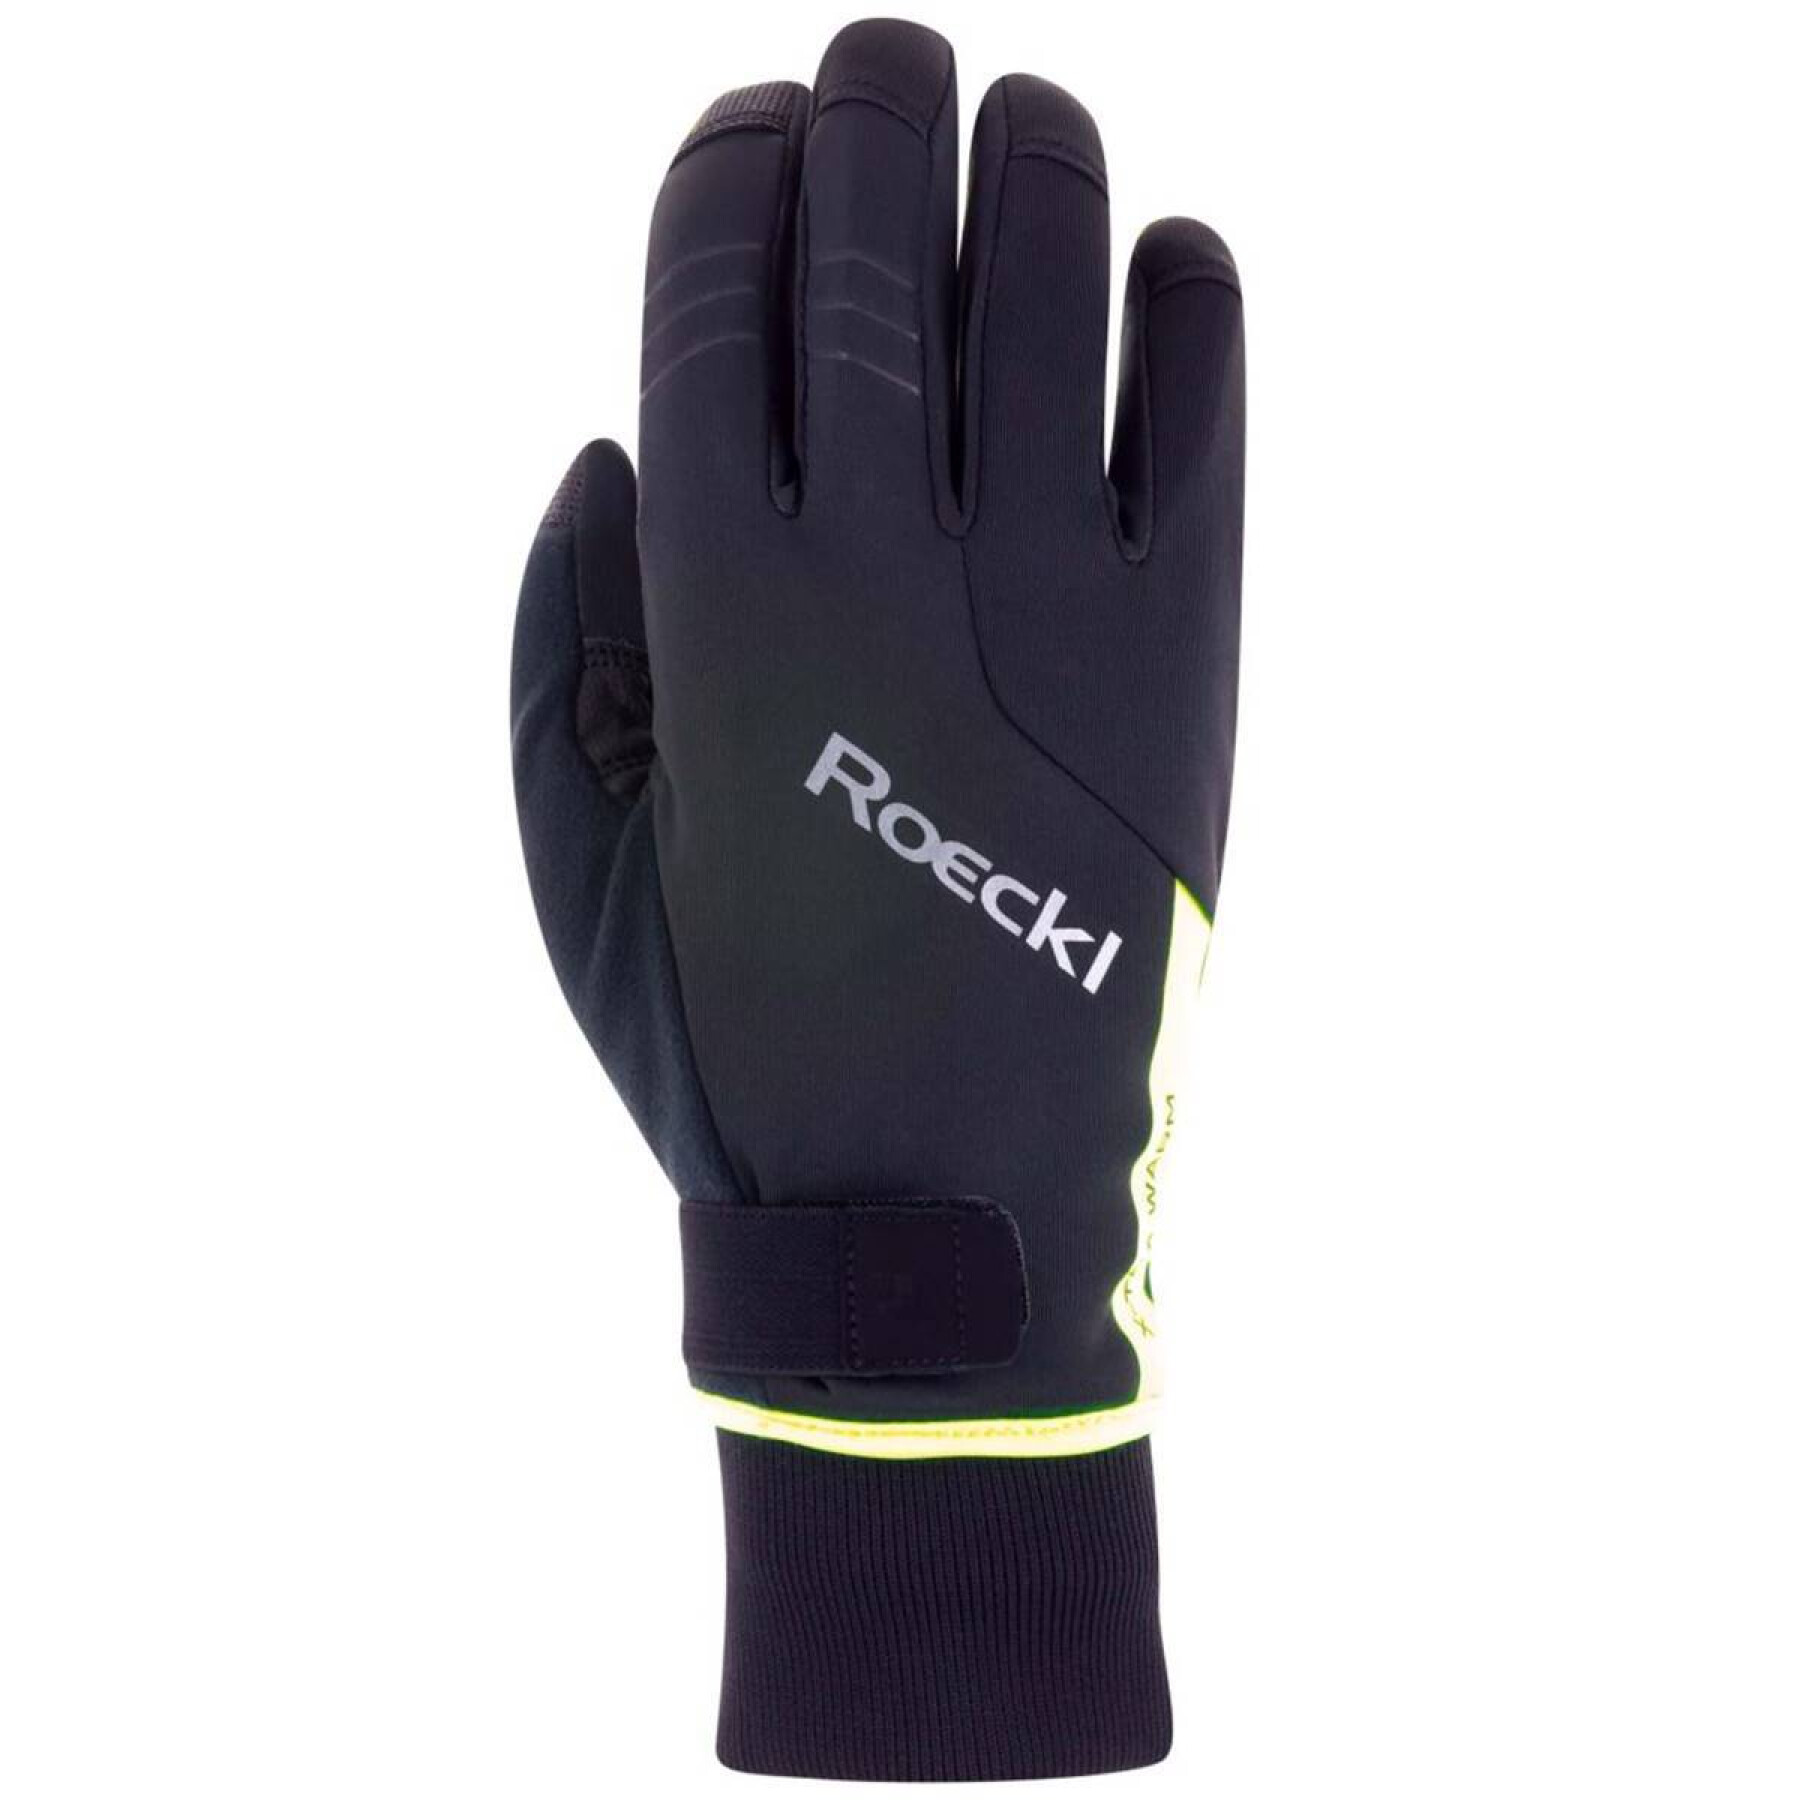 Long gloves Roeckl Villach 2